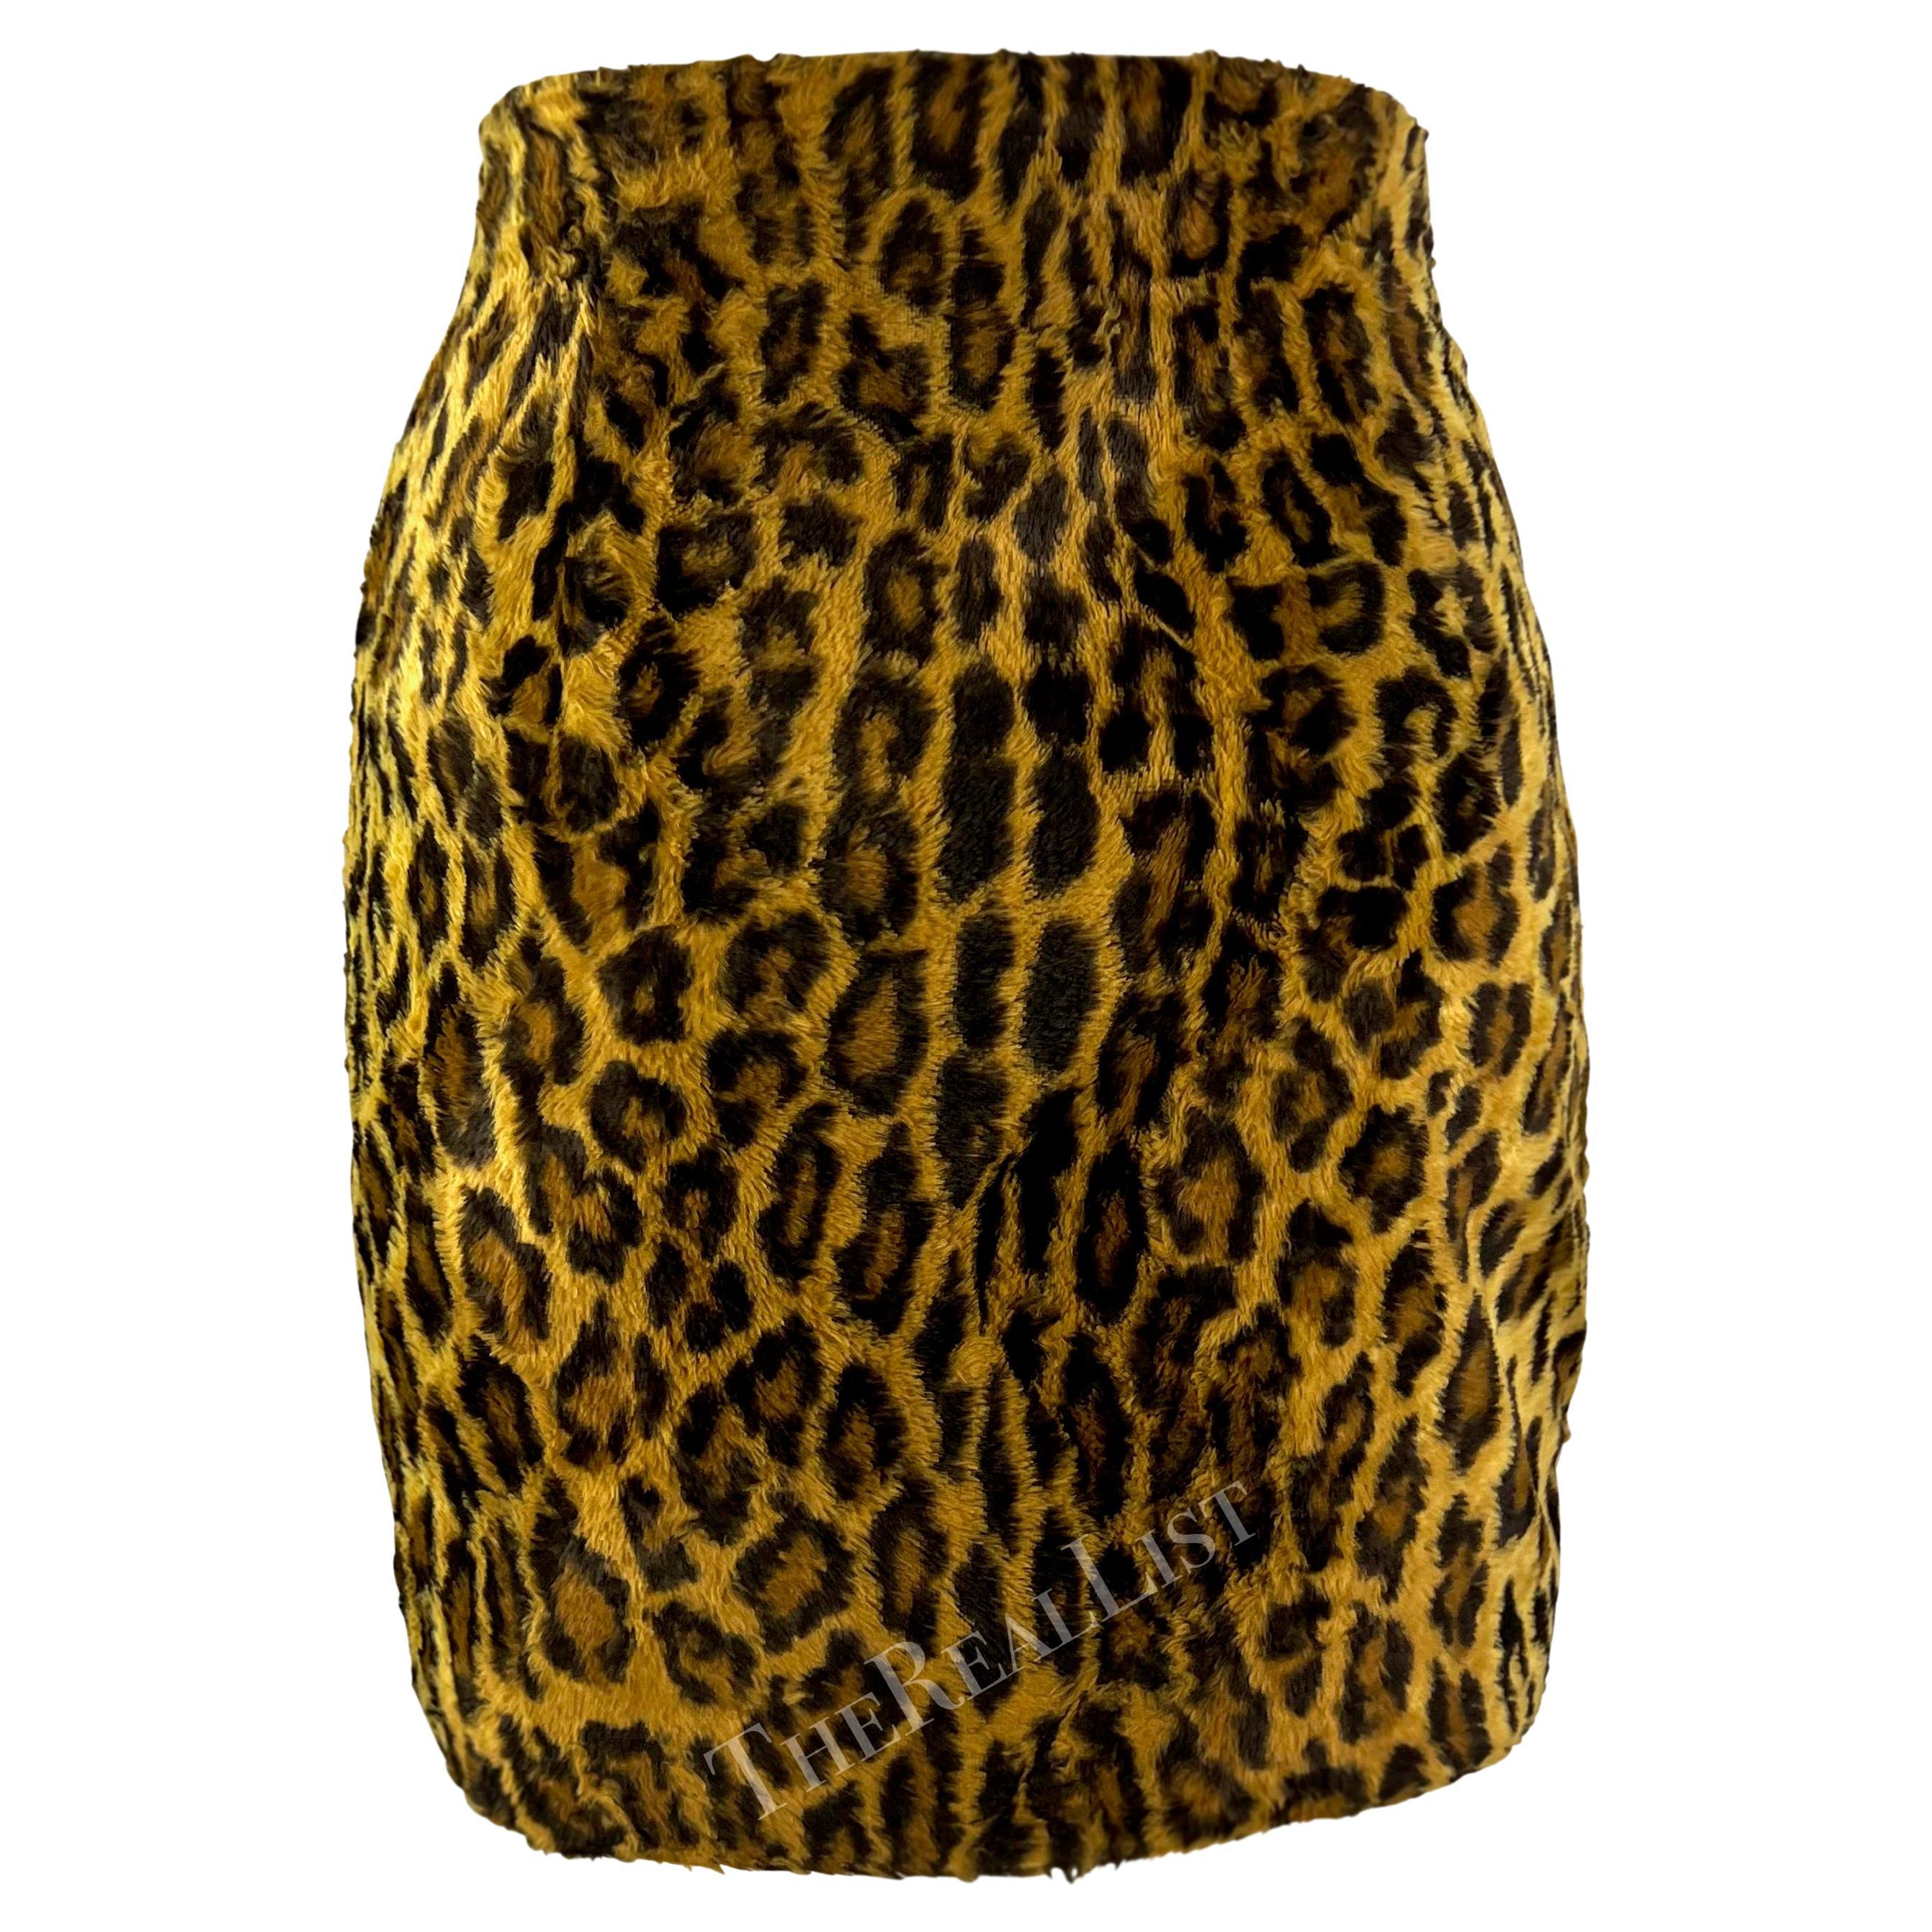 F/W 1994 Gianni Versace Couture Cheetah Print Faux Fur Mini Skirt  For Sale 4